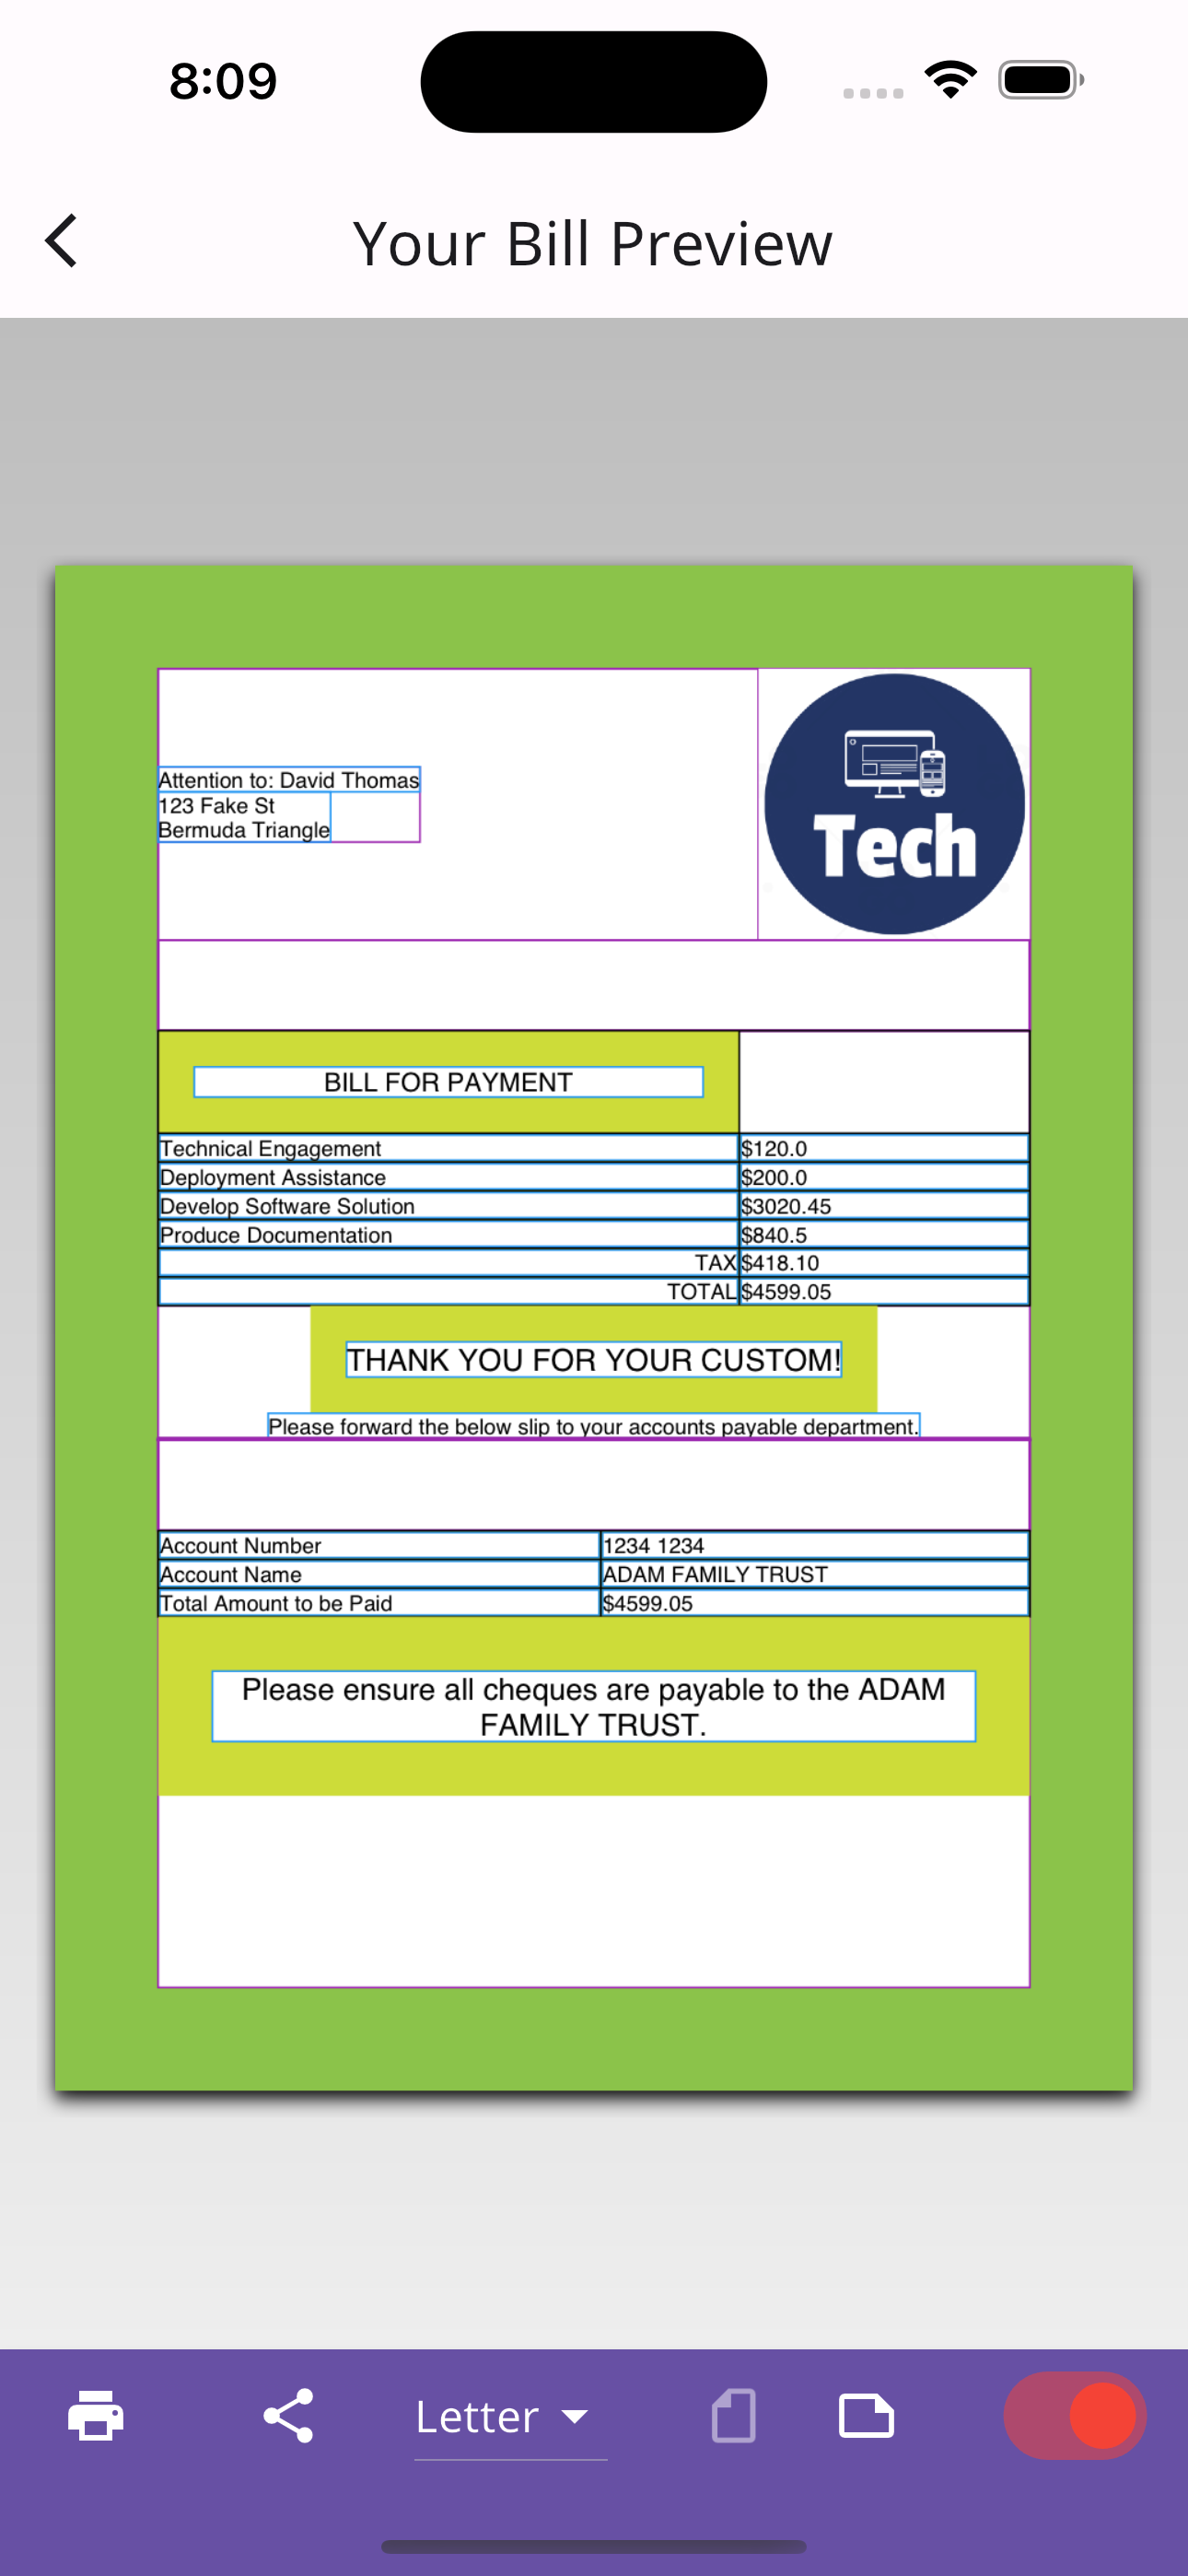 Flutter PDF Document Generator Application